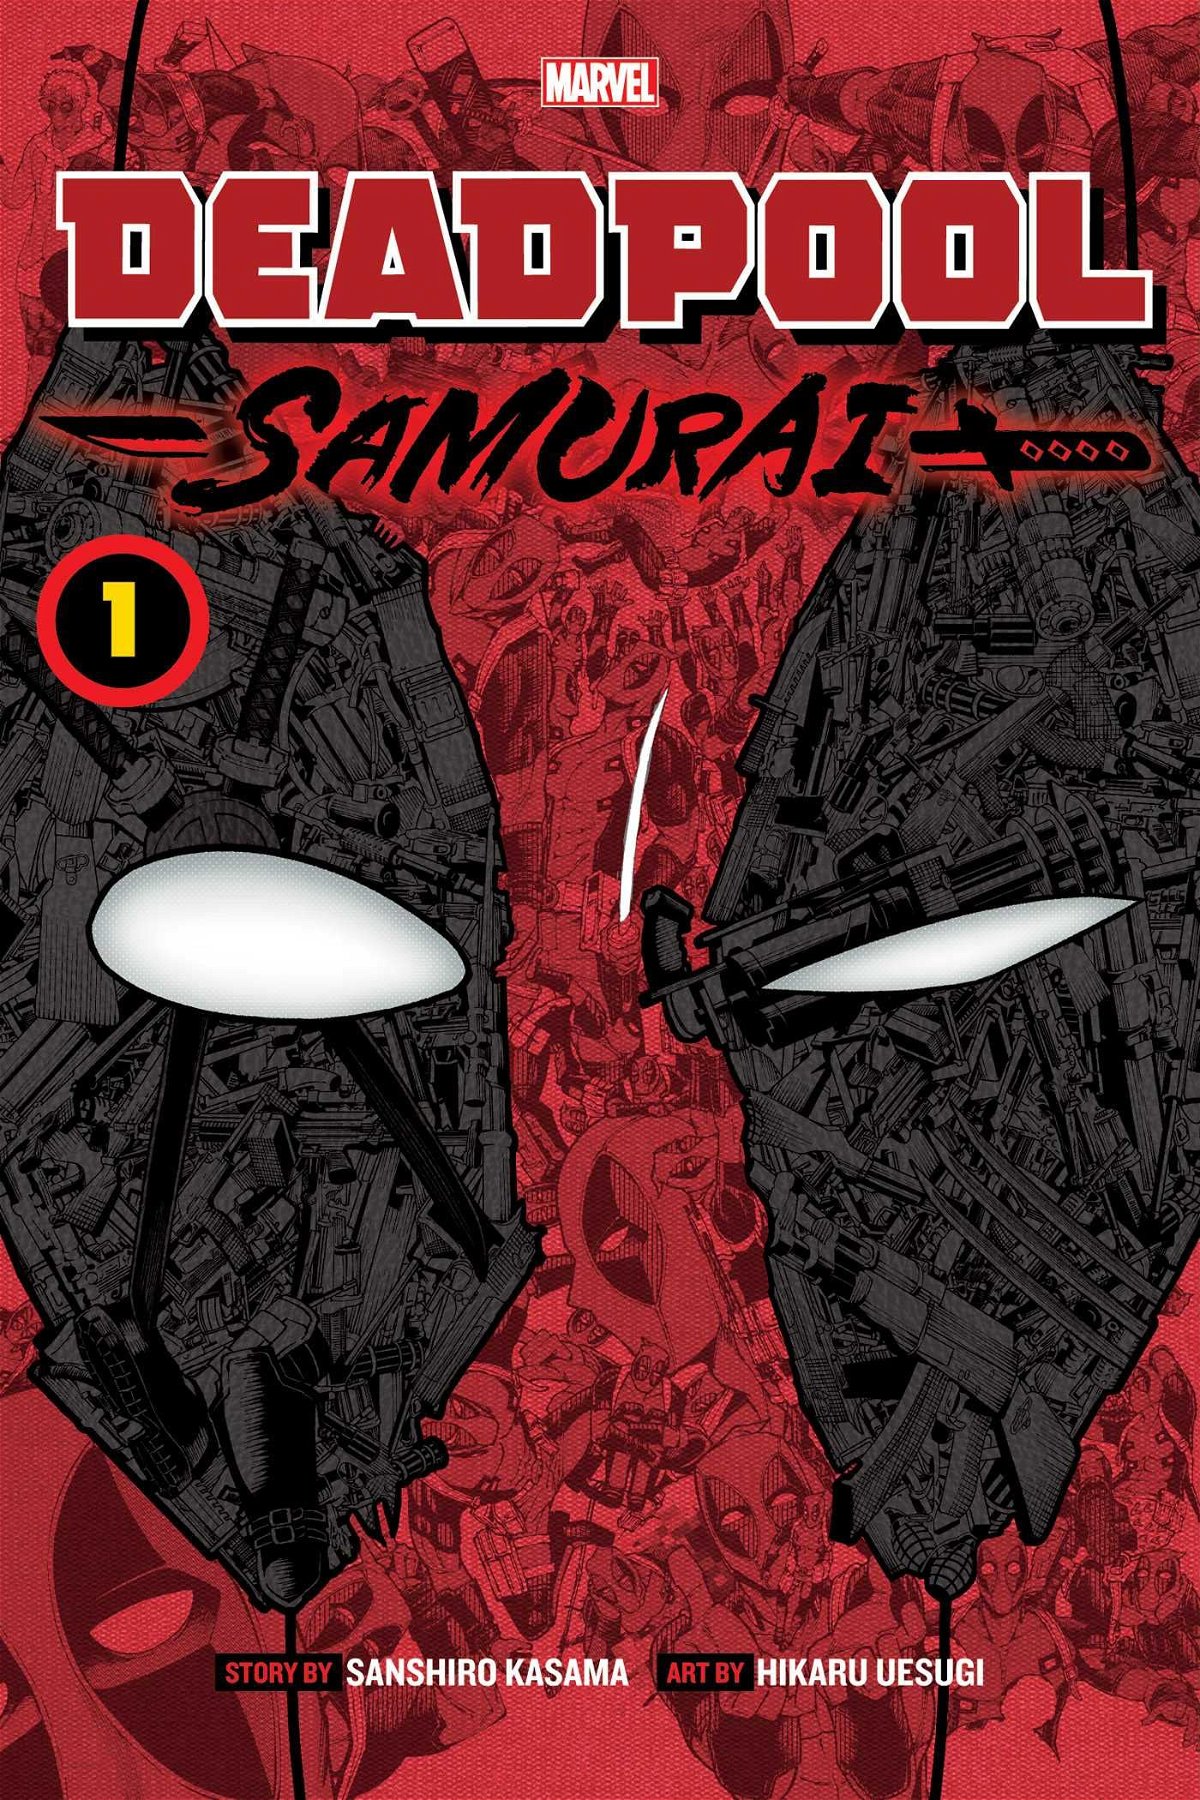 Deadpool samurai vol. 1 1